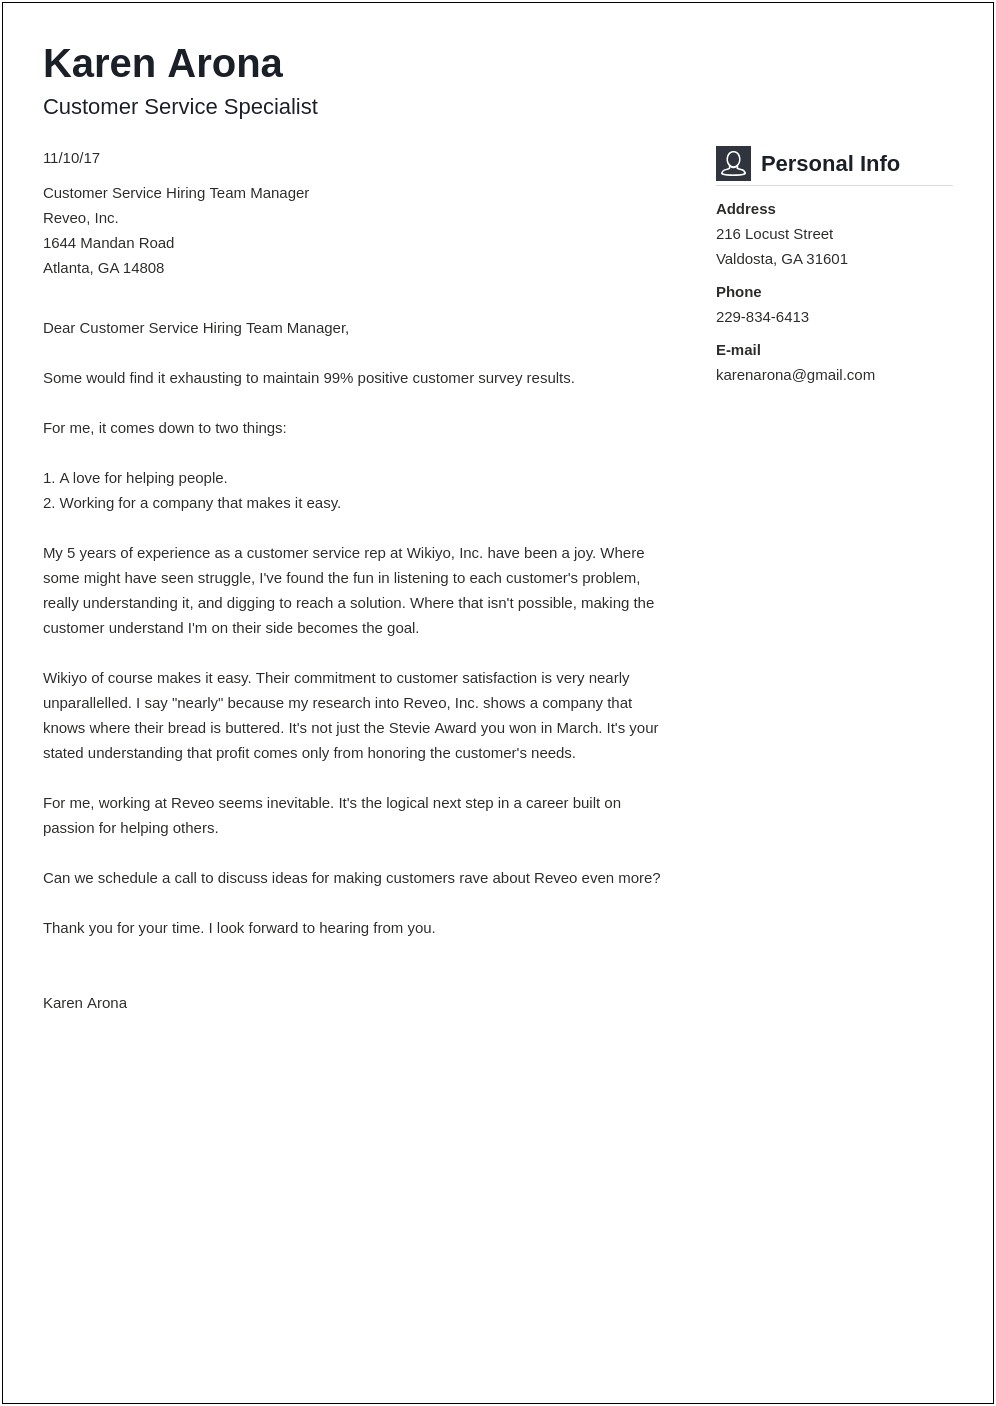 Sample Resume And Cover Letter For Supervisor Position